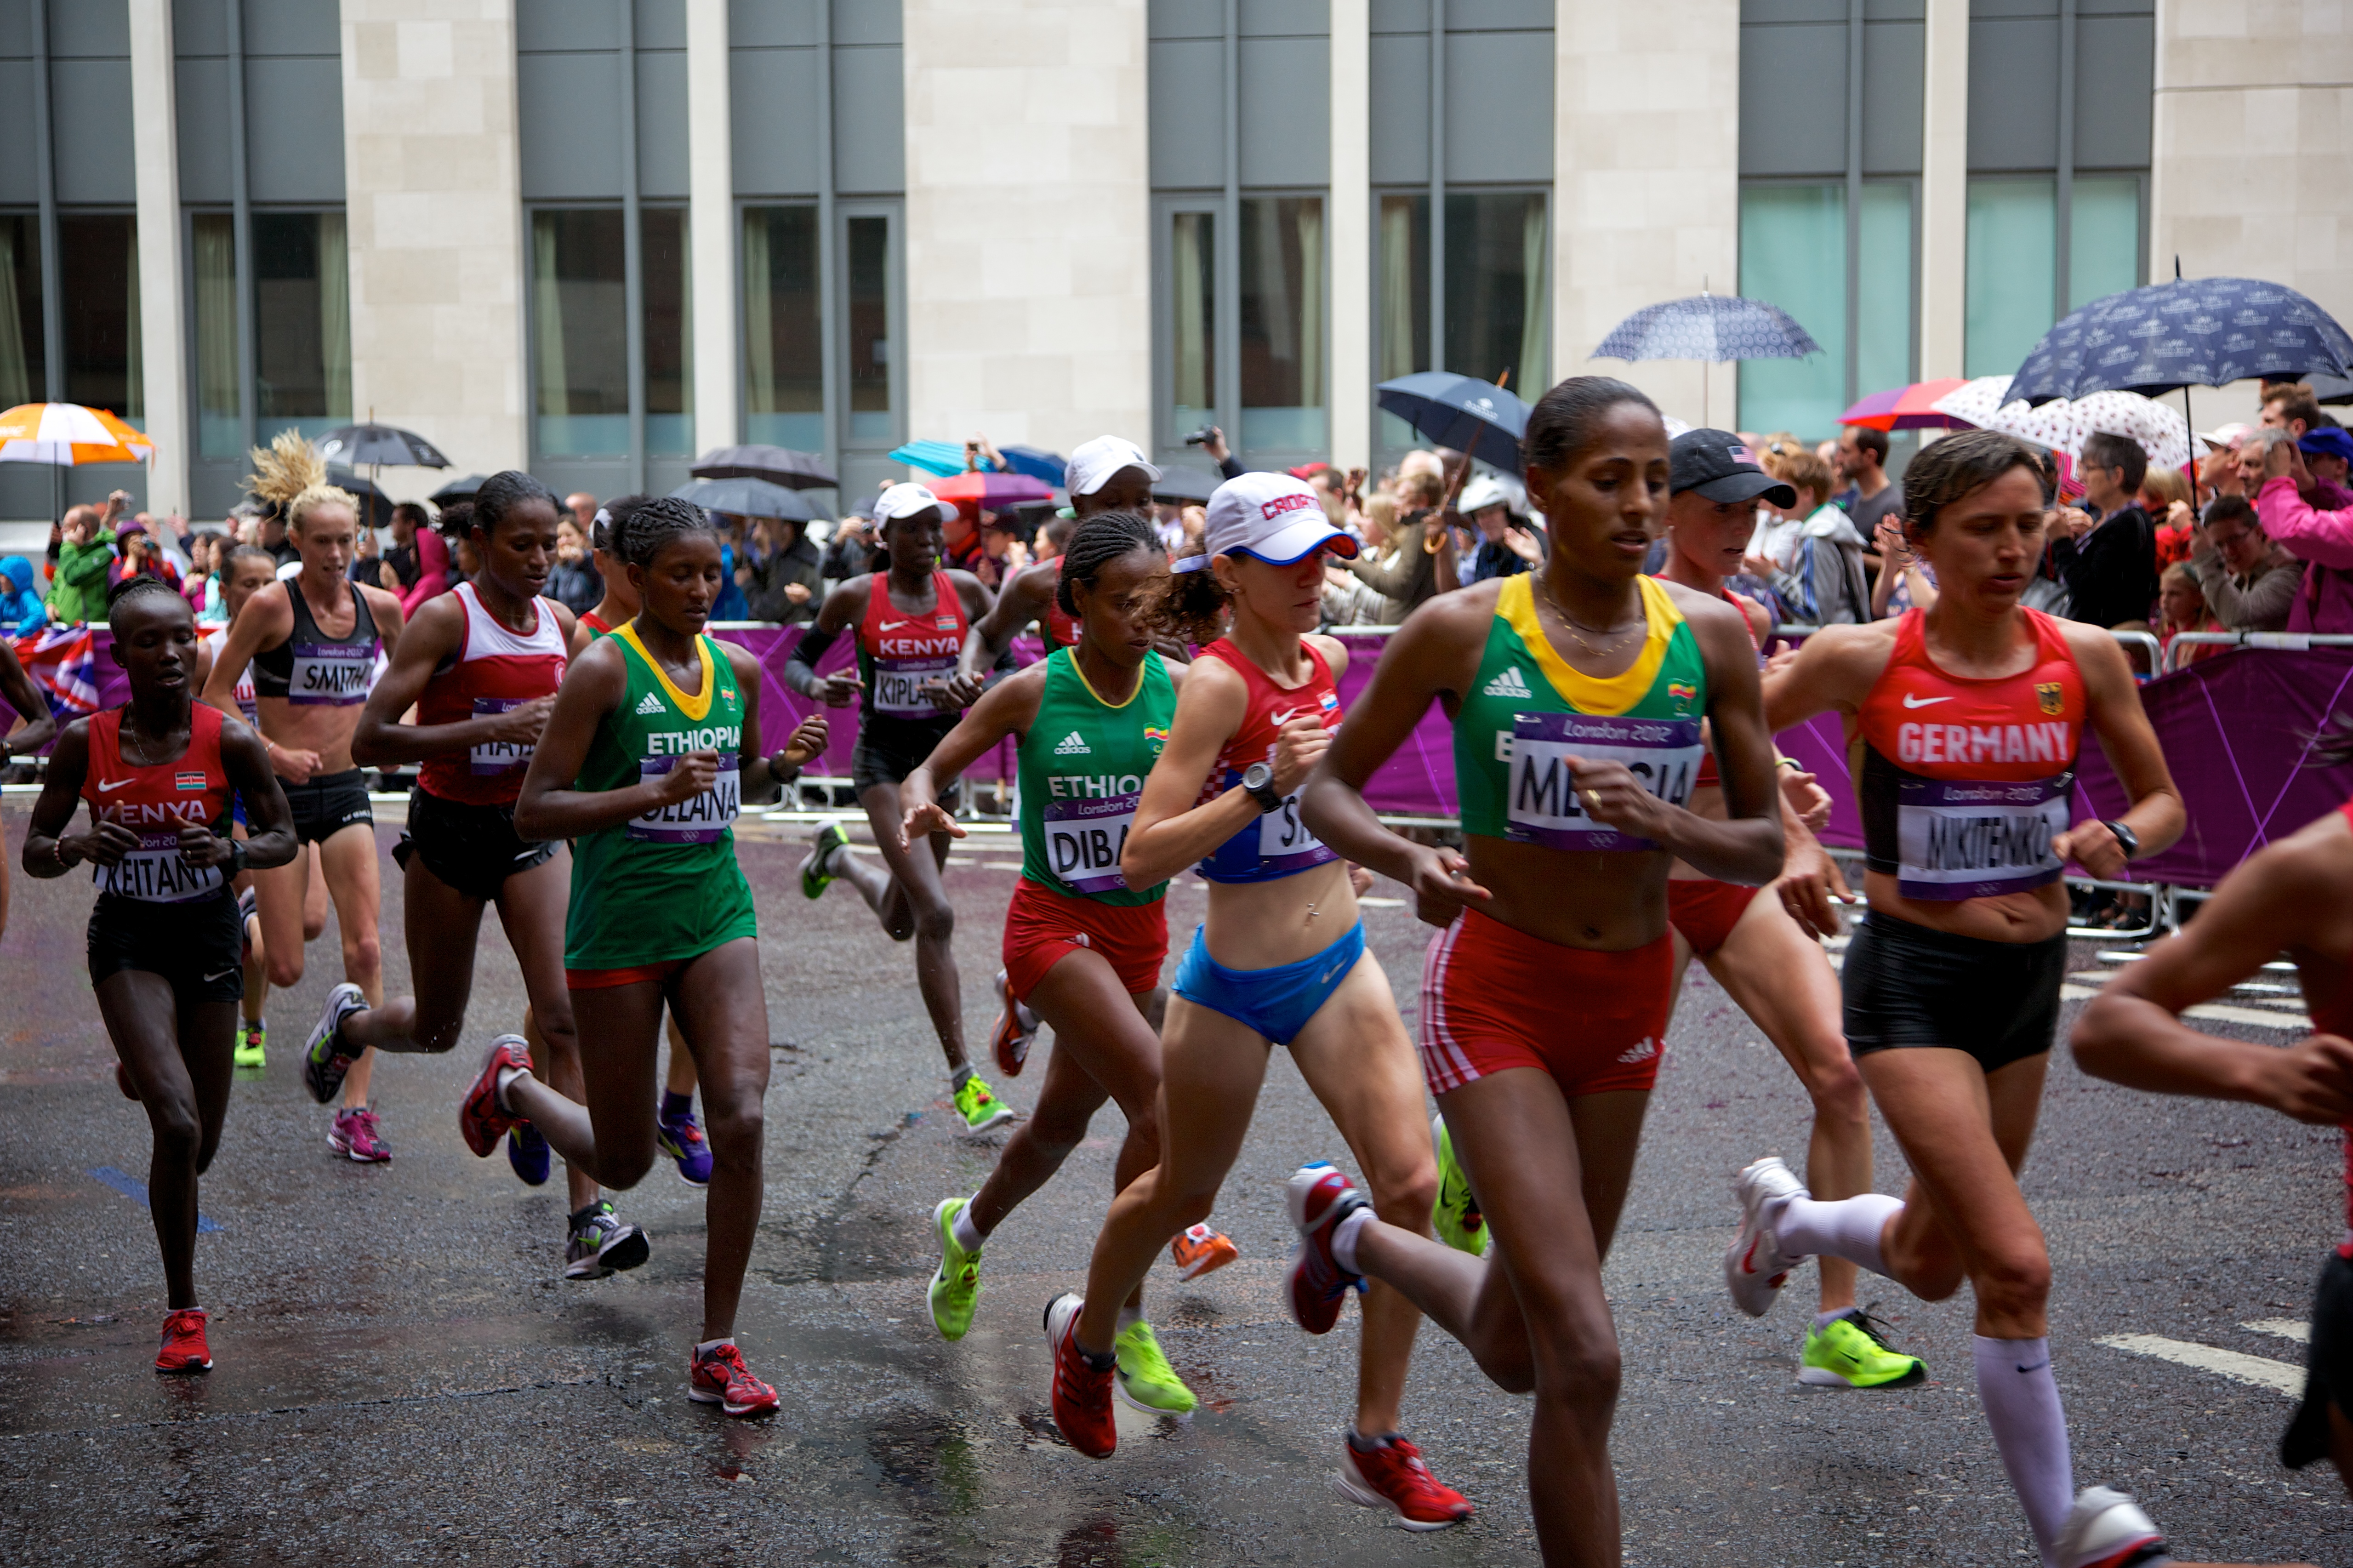 FileWomen's Marathon London 2012 006.jpg Wikimedia Commons